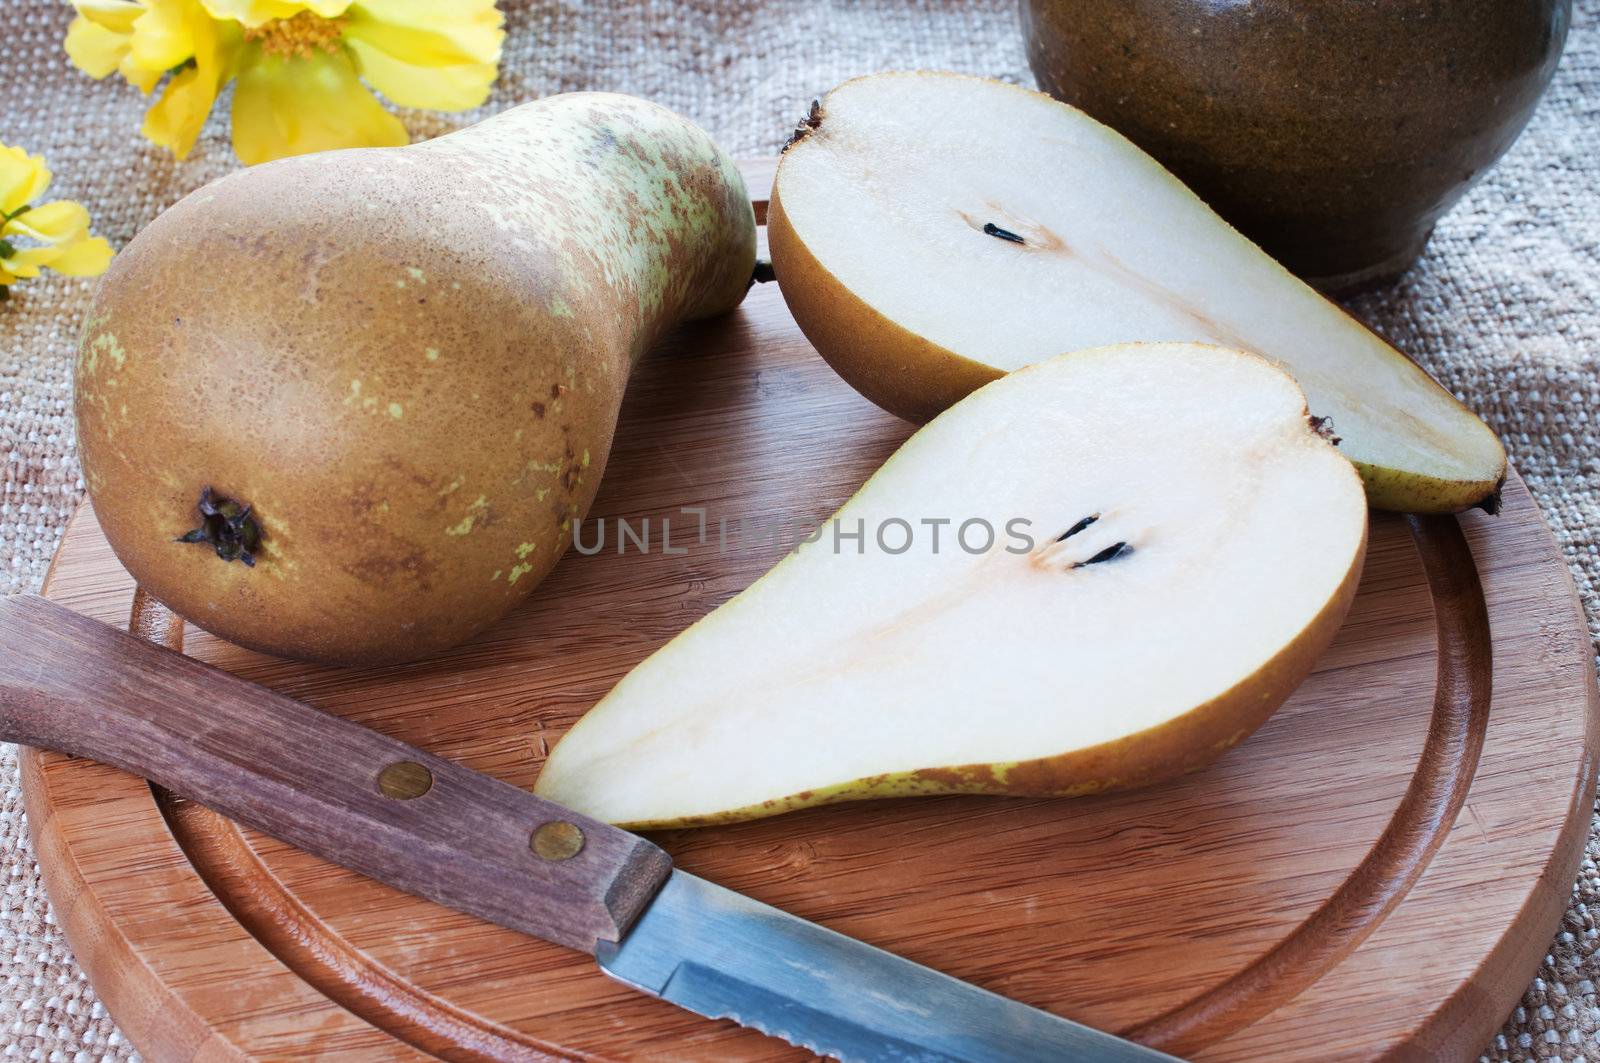 Pears on cutting board by Nanisimova